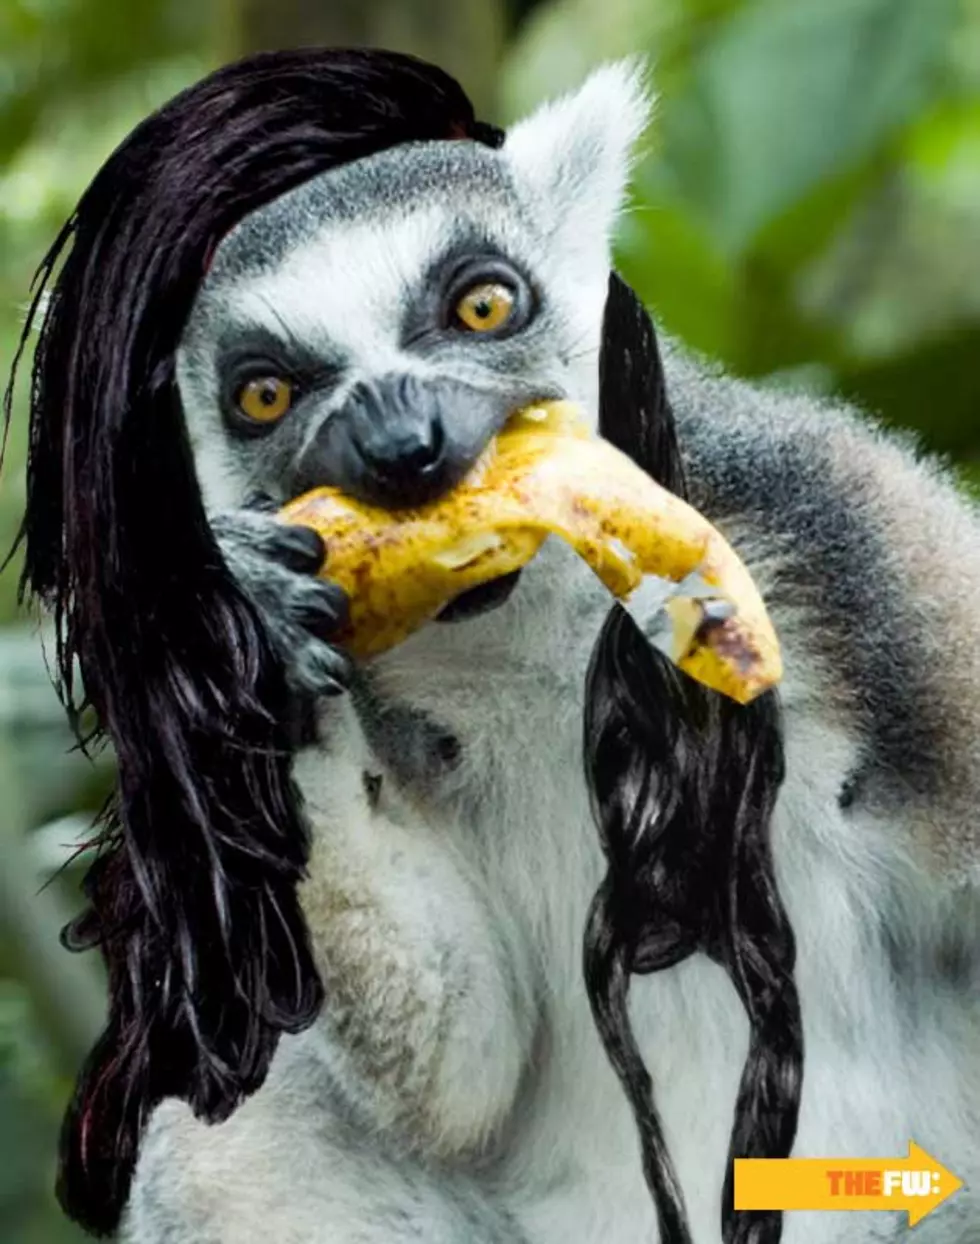 https://townsquare.media/site/341/files/2012/04/TheFW-skrillex-lemur.jpg?w=980&q=75